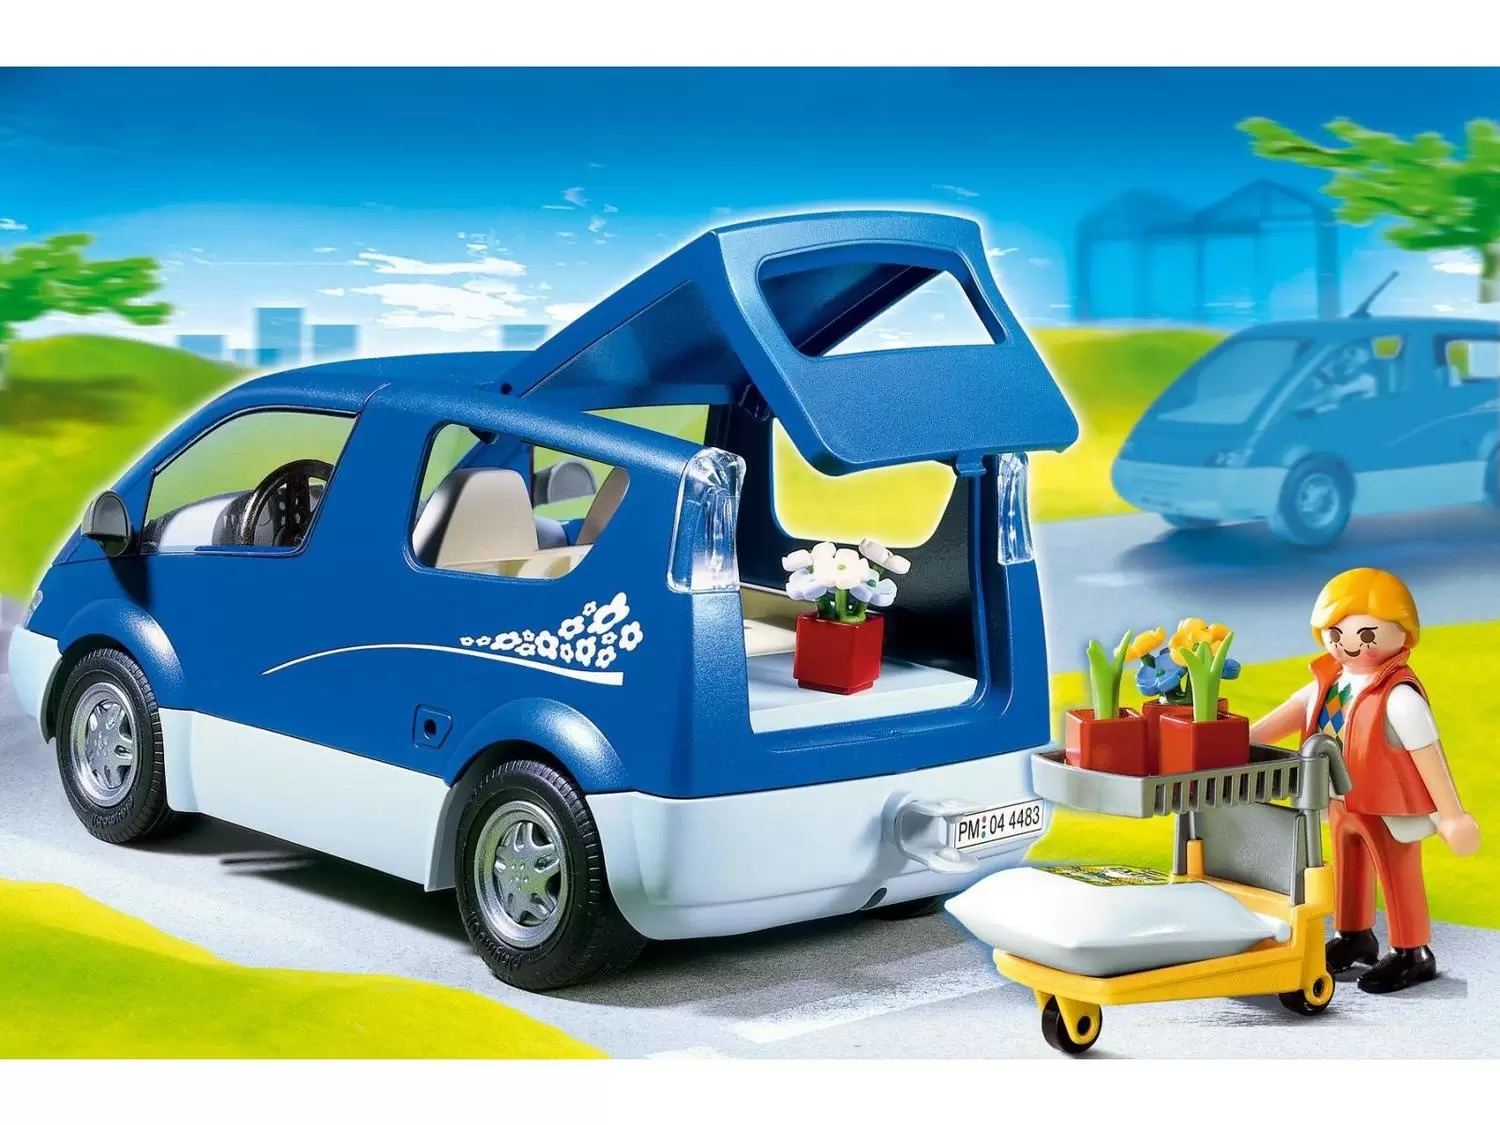 City Van - Playmobil in the City 4483